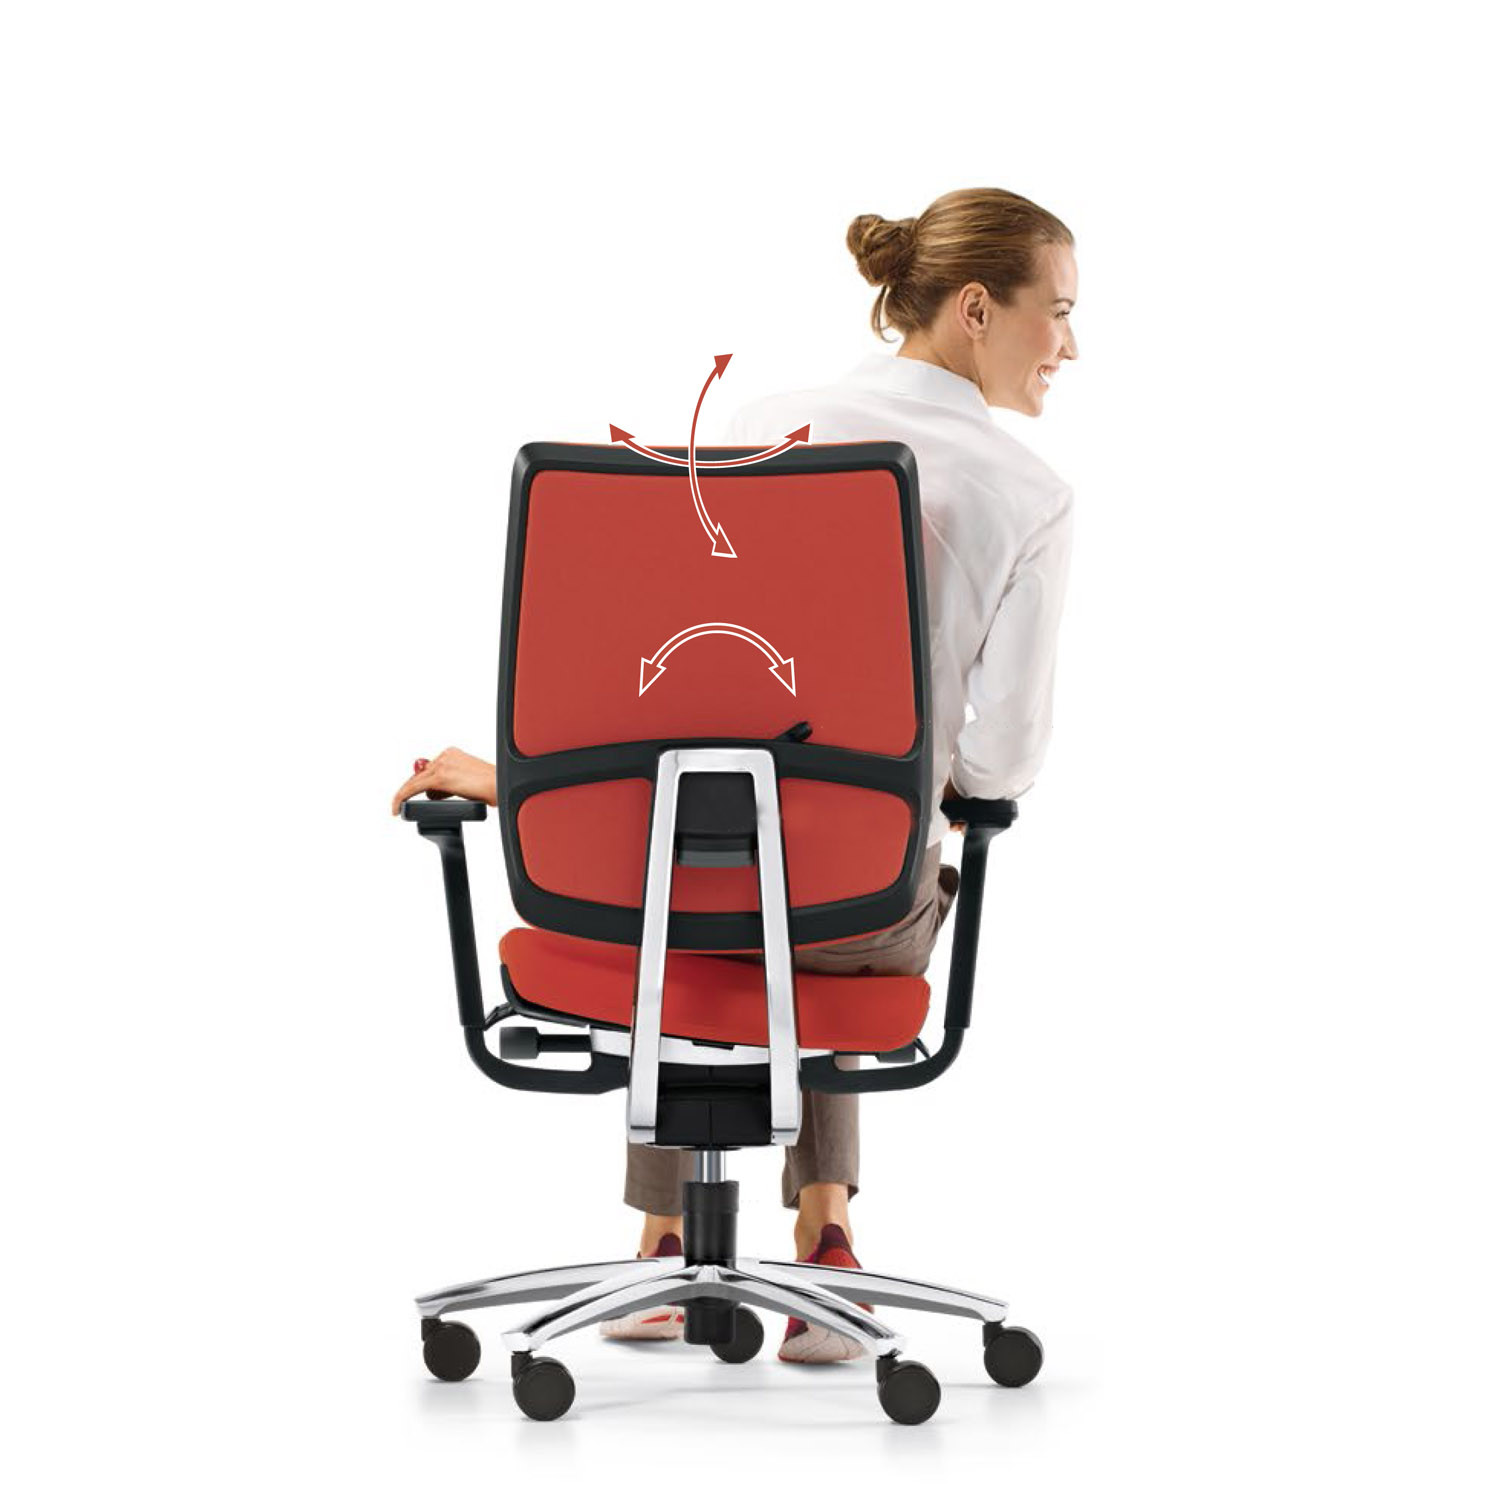 Swing Up Task Chair by Rudiger Schaack